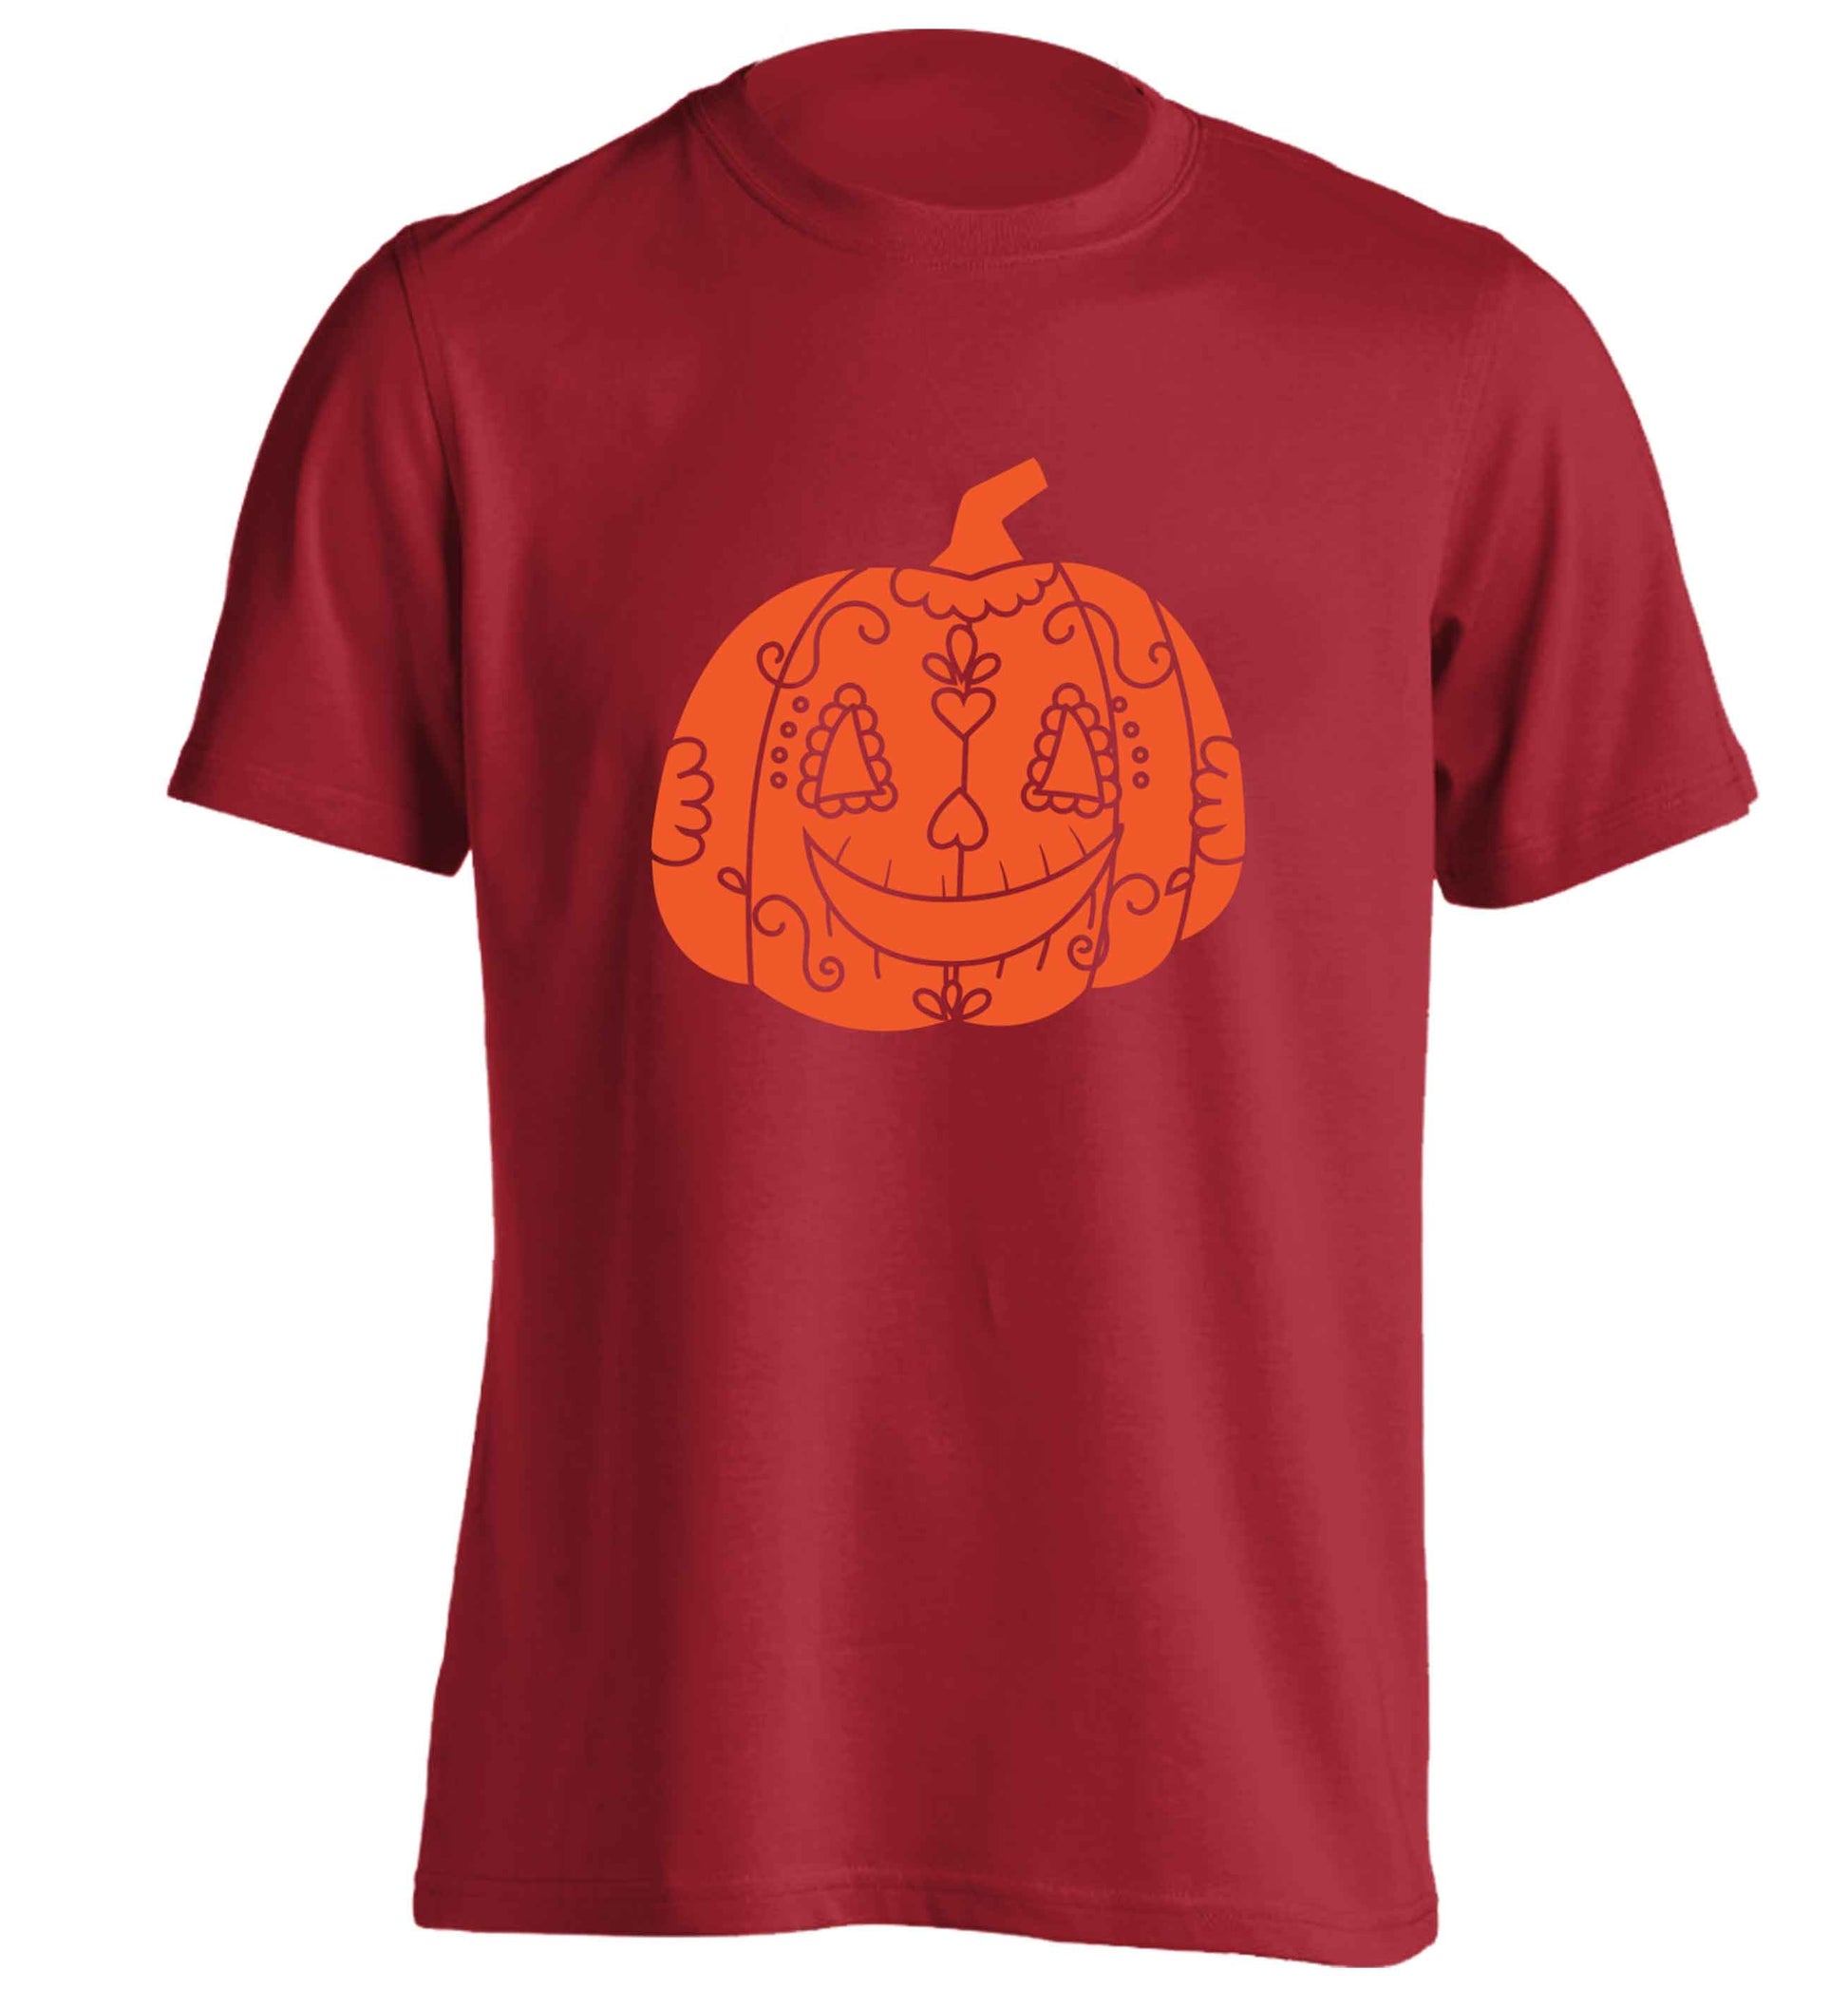 Pumpkin sugar skull adults unisex red Tshirt 2XL